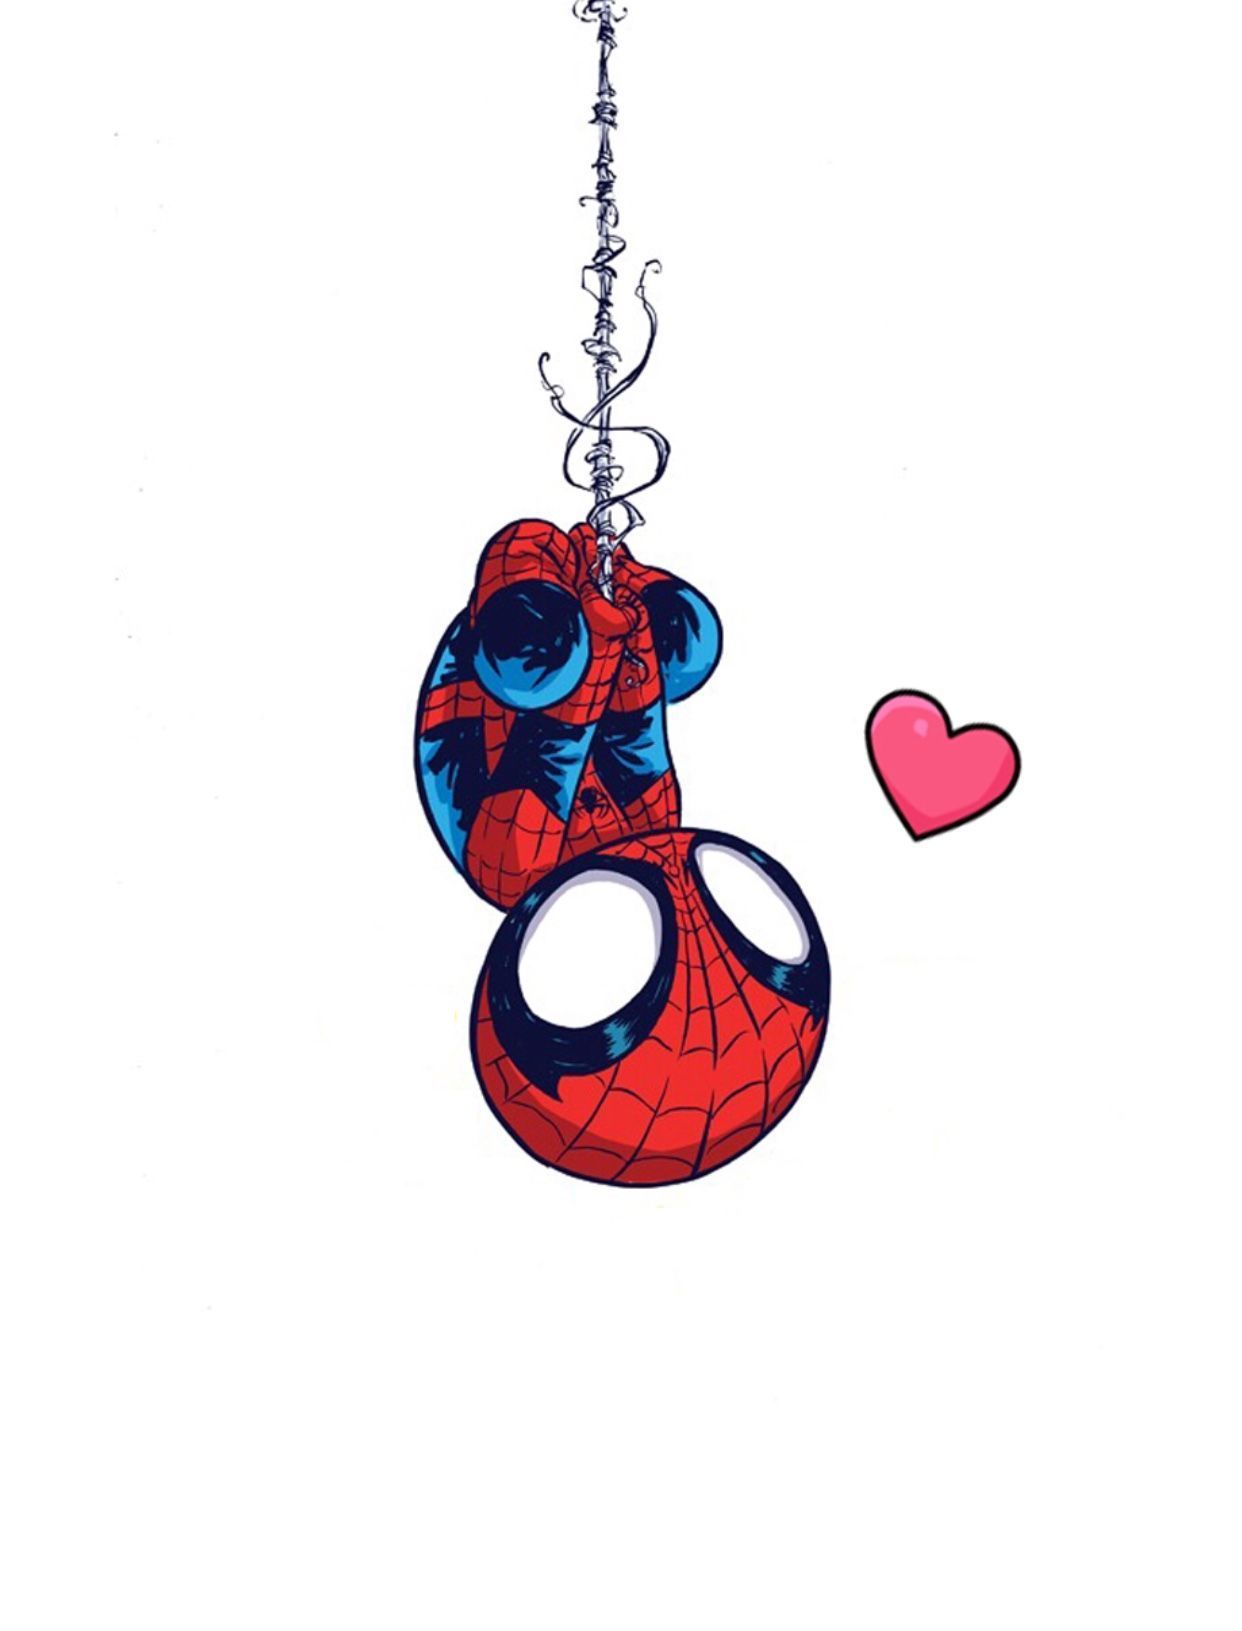 Cute Spiderman Wallpaper